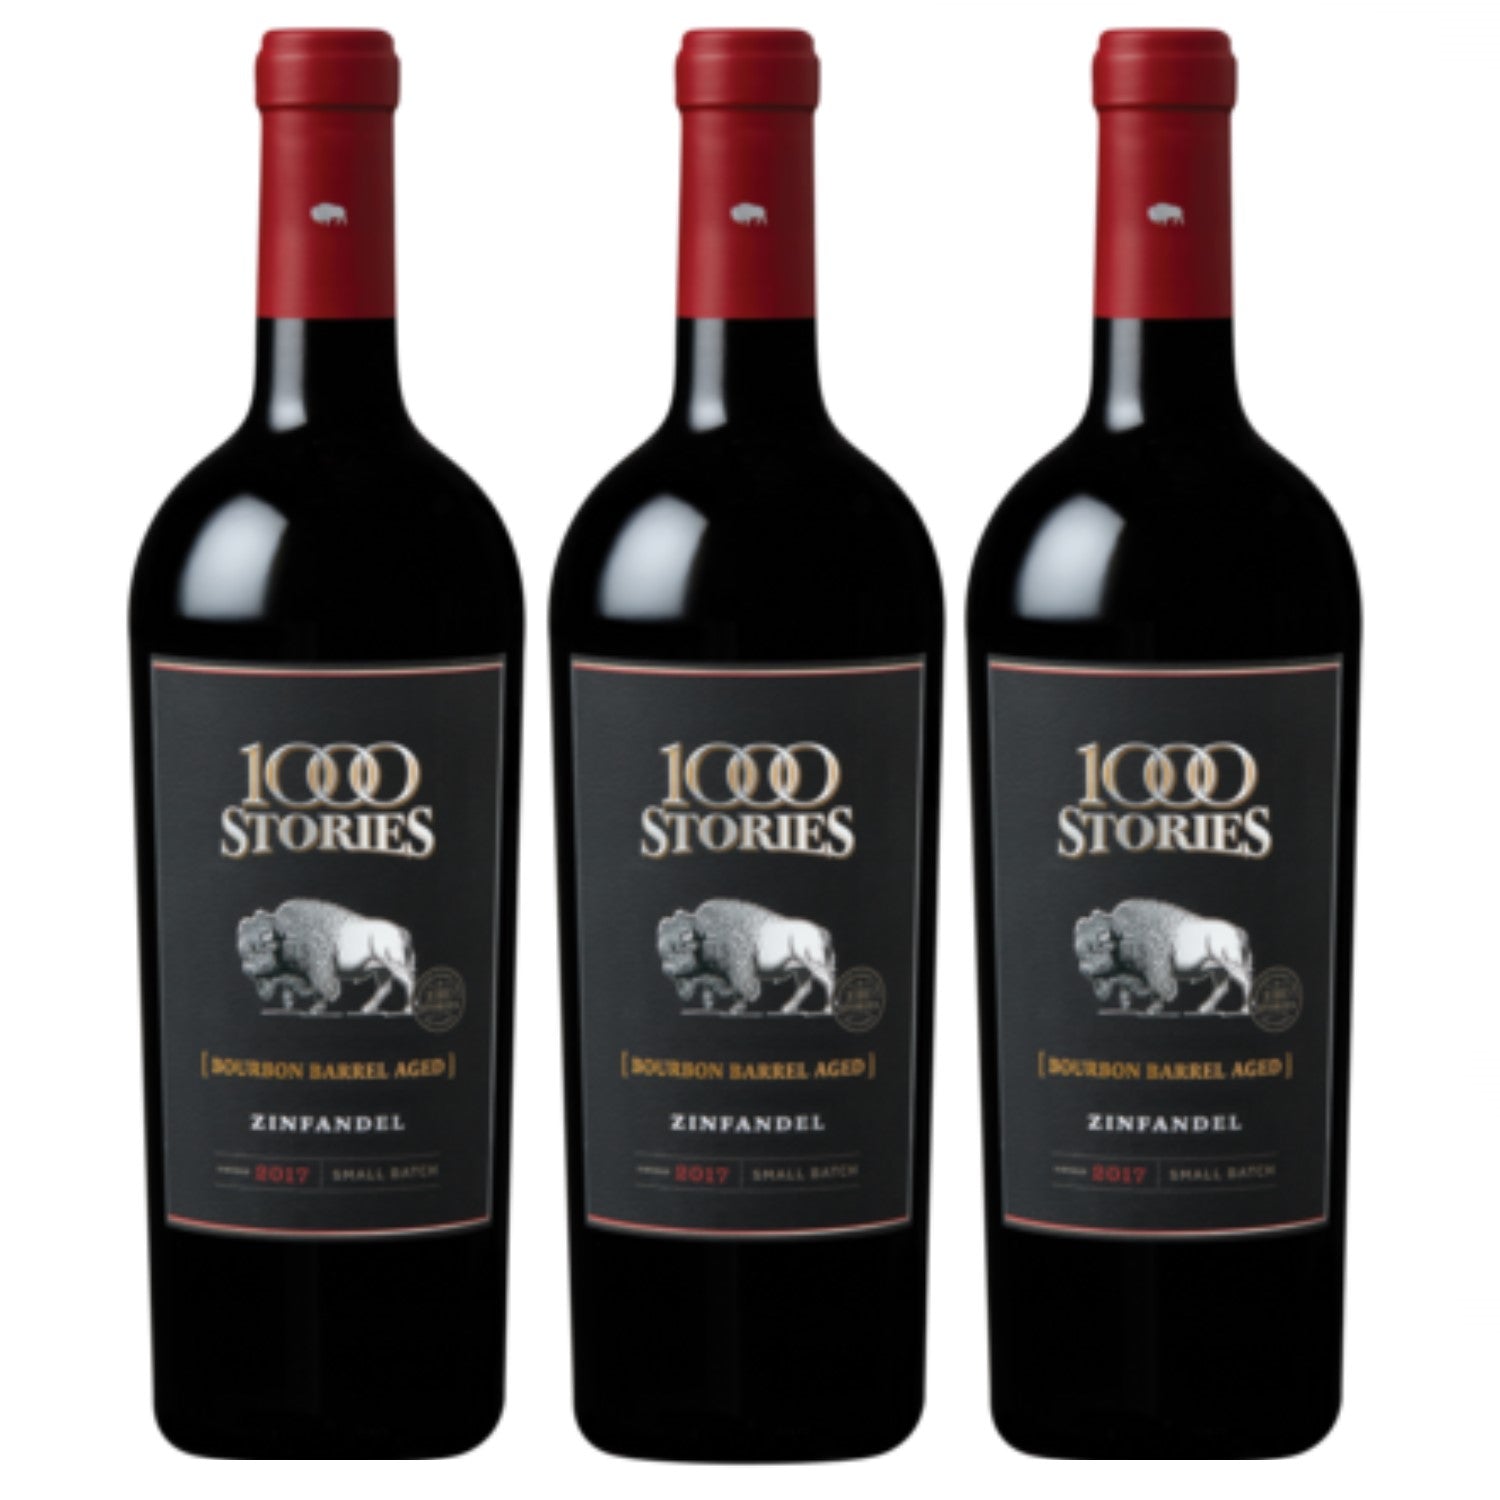 Fetzer 1000 Stories Bourbon Barrel aged Zinfandel Red Wine Dry USA California (3 x 0.75l)